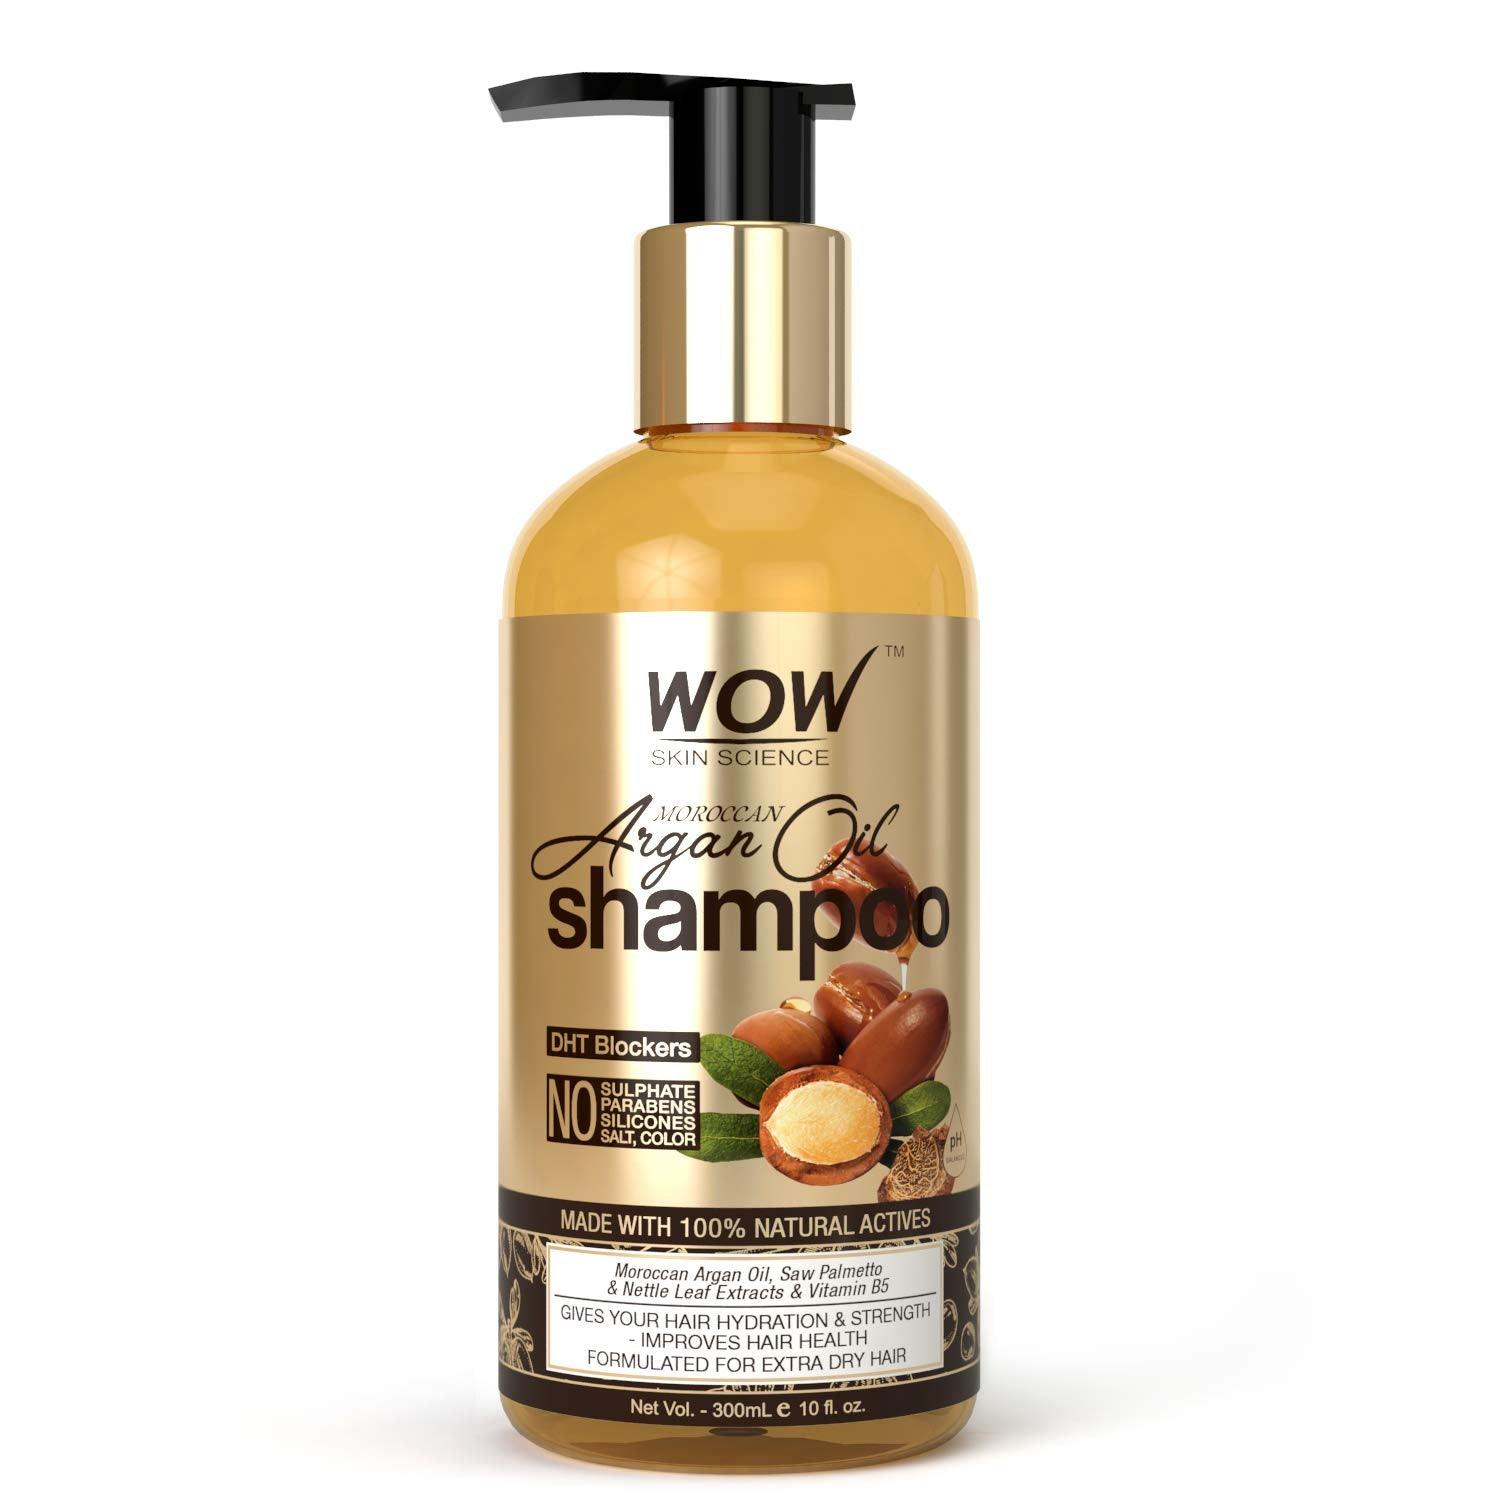 Wow Skin Science Argan Oil Shampoo 300 ml - Mrayti Store